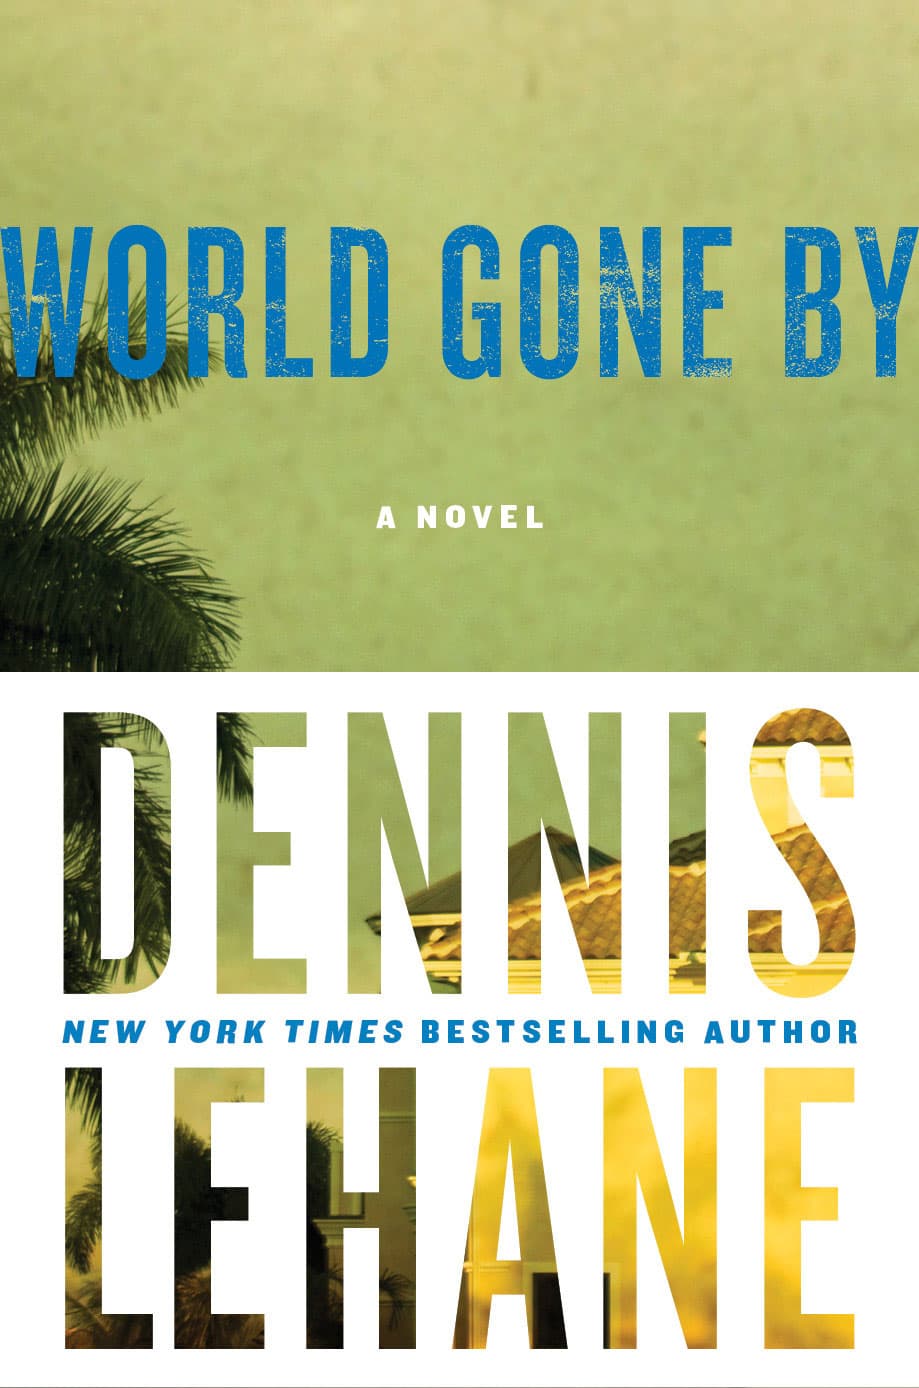 Lehane's new novel "World Gone By" (Courtesy)